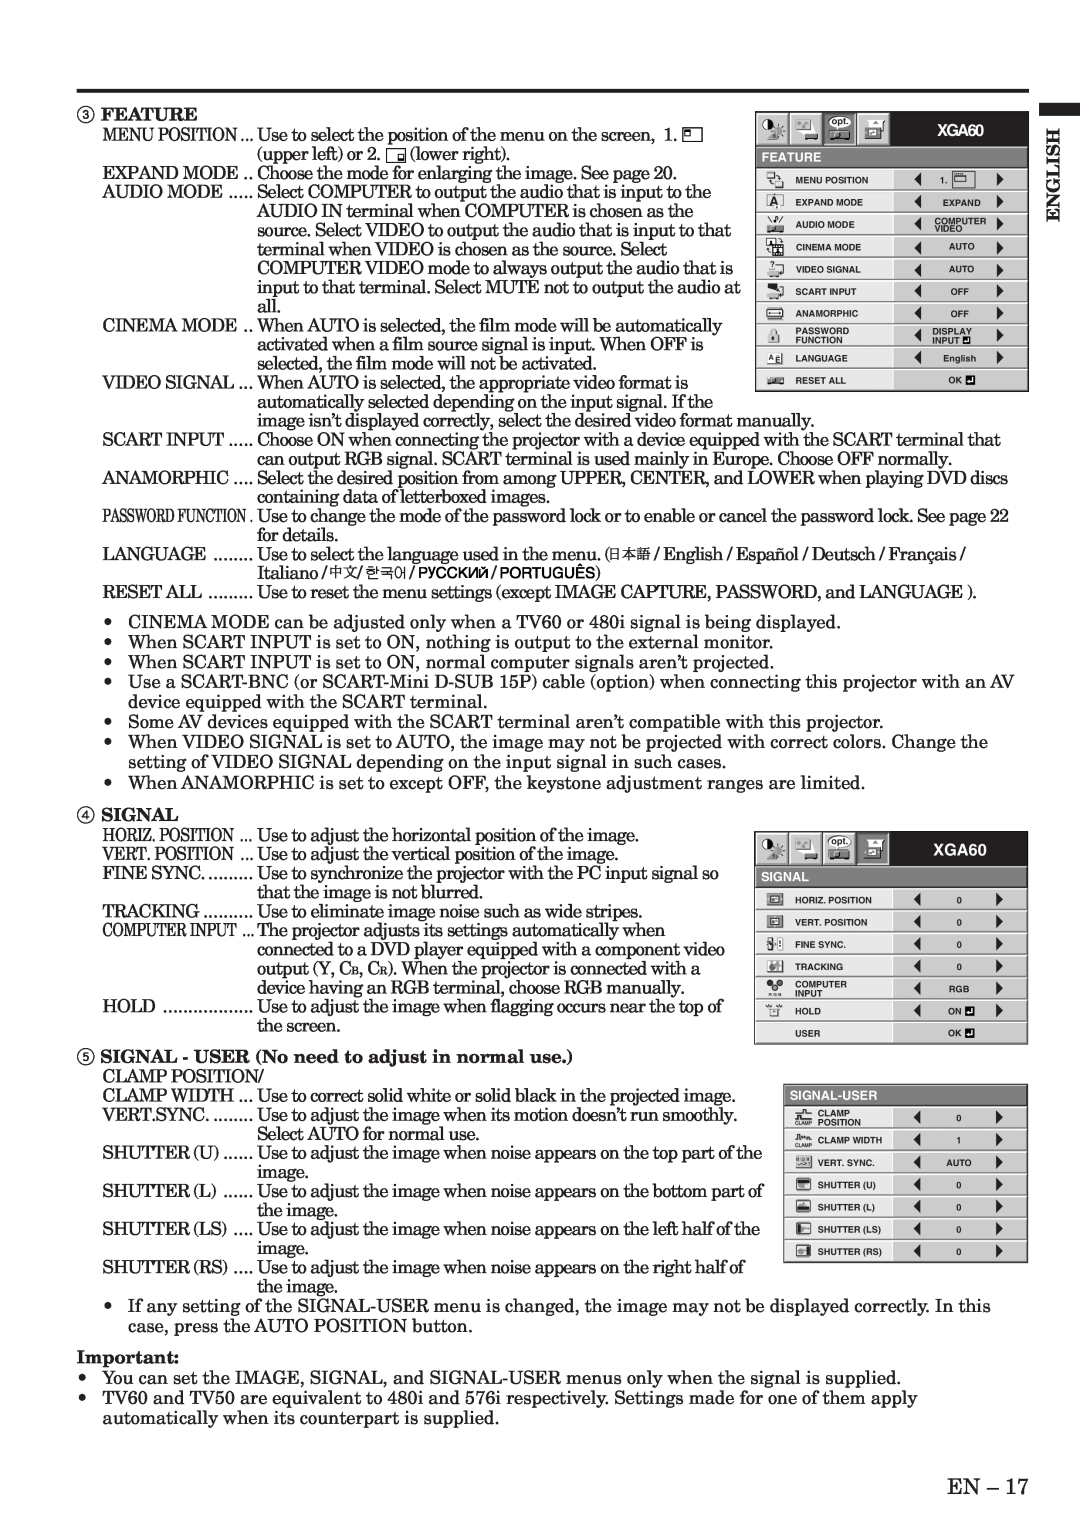 Mitsubishi Electronics XL6U user manual Computer Input, Feature, Signal-User 